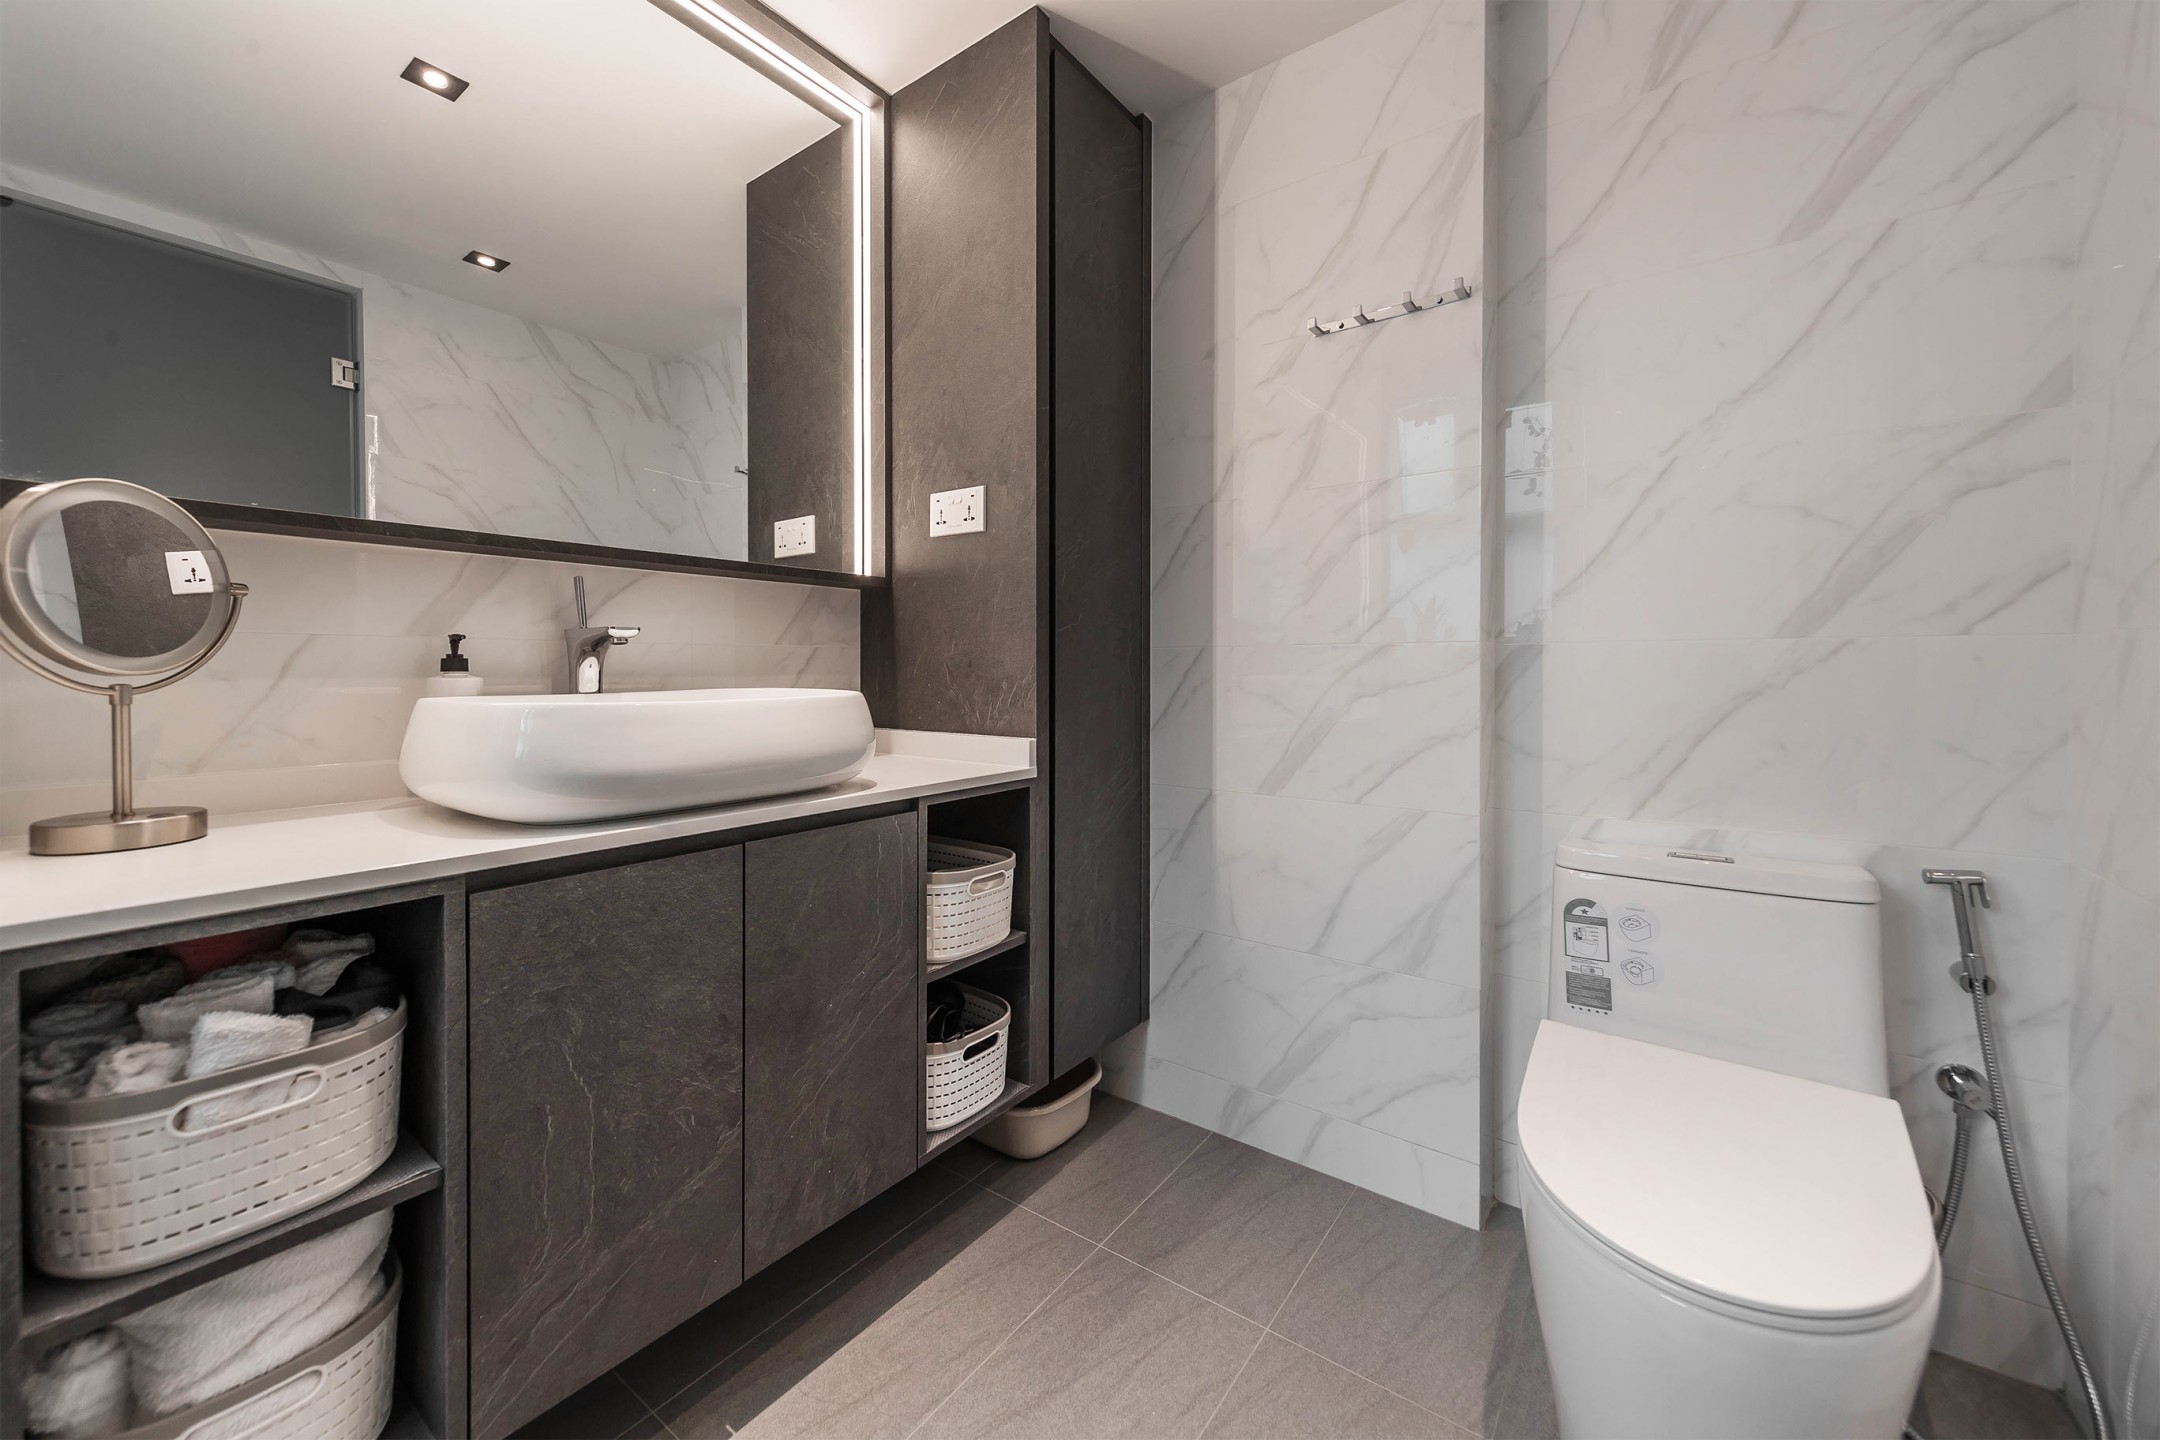 squarerooms renozone condo condominium renovation home interior design bathroom toilet monochromatic grey white